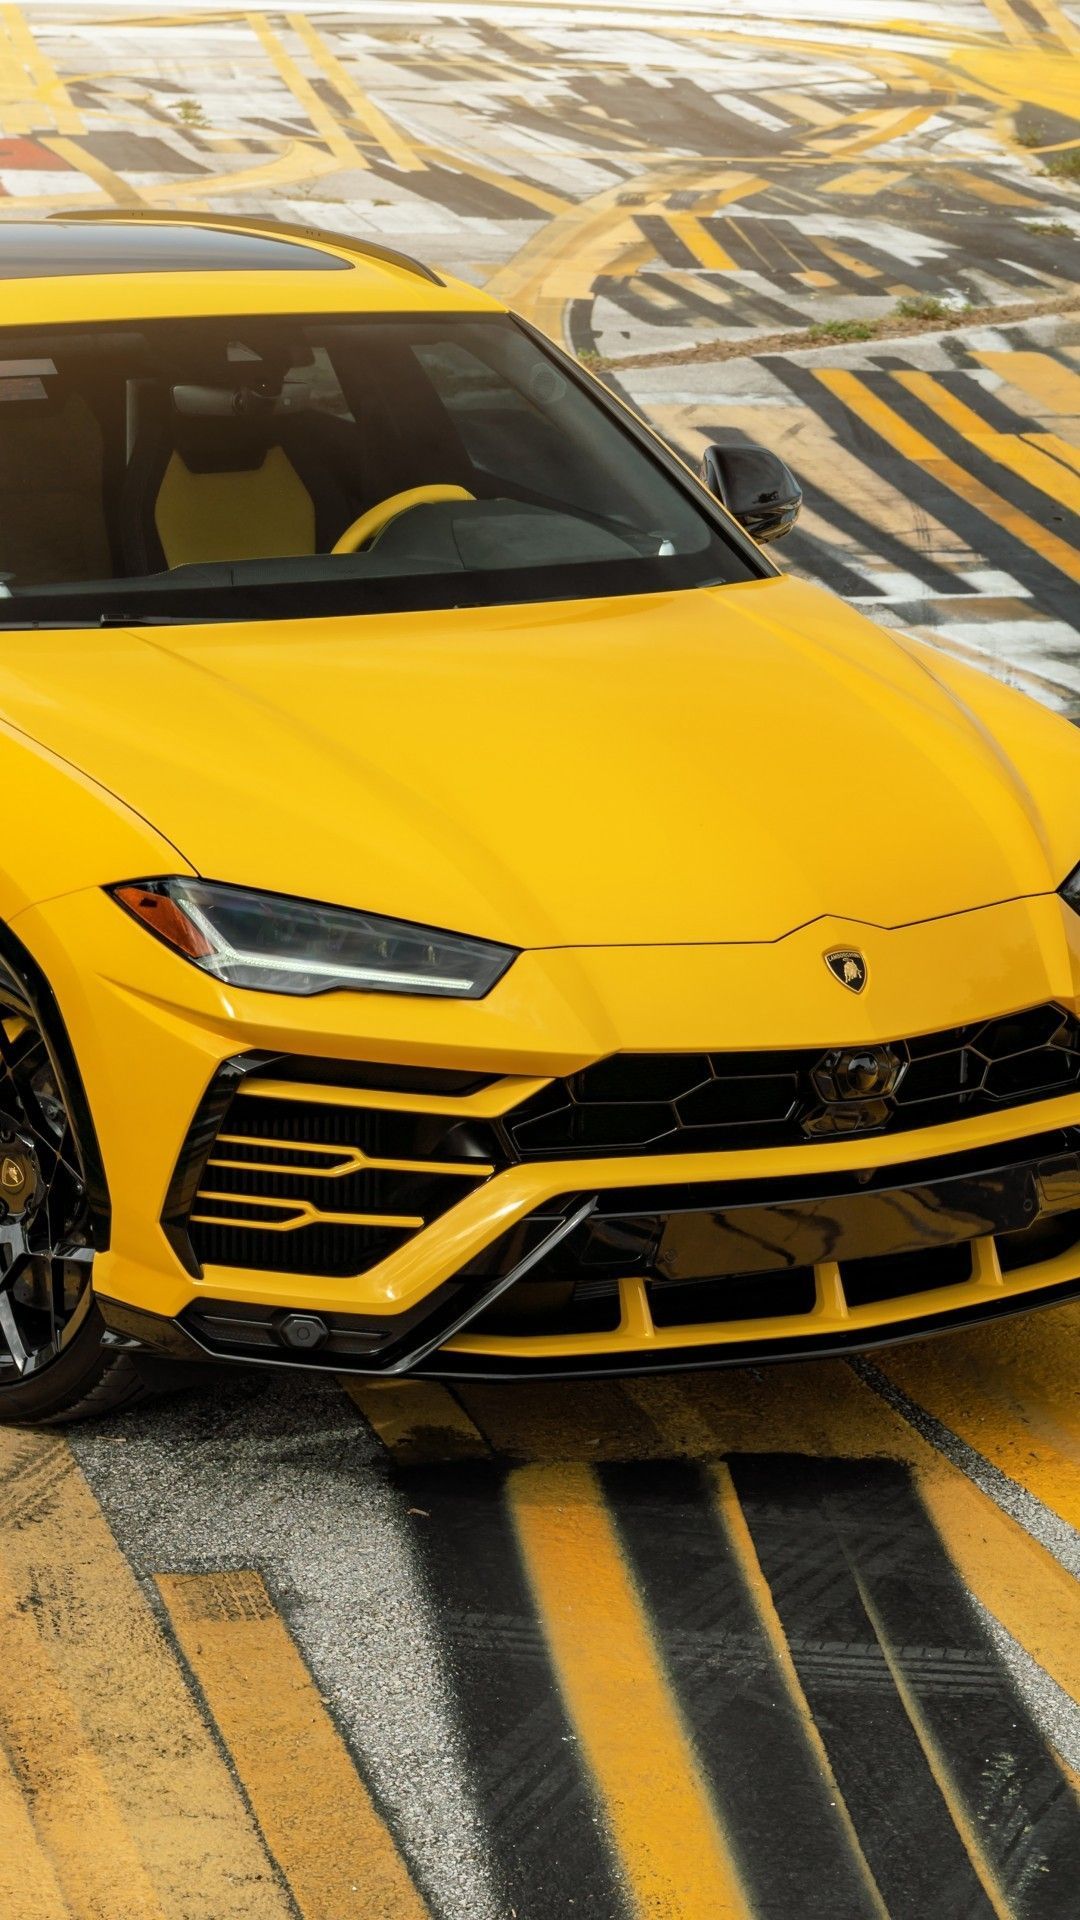 Download 1080x1920 Lamborghini Urus, Yellow Suv Cars Wallpaper for iPhone iPhone 7 Plus, iPhone 6+, Sony Xperia Z,. Sports cars luxury, Suv cars, Lamborghini